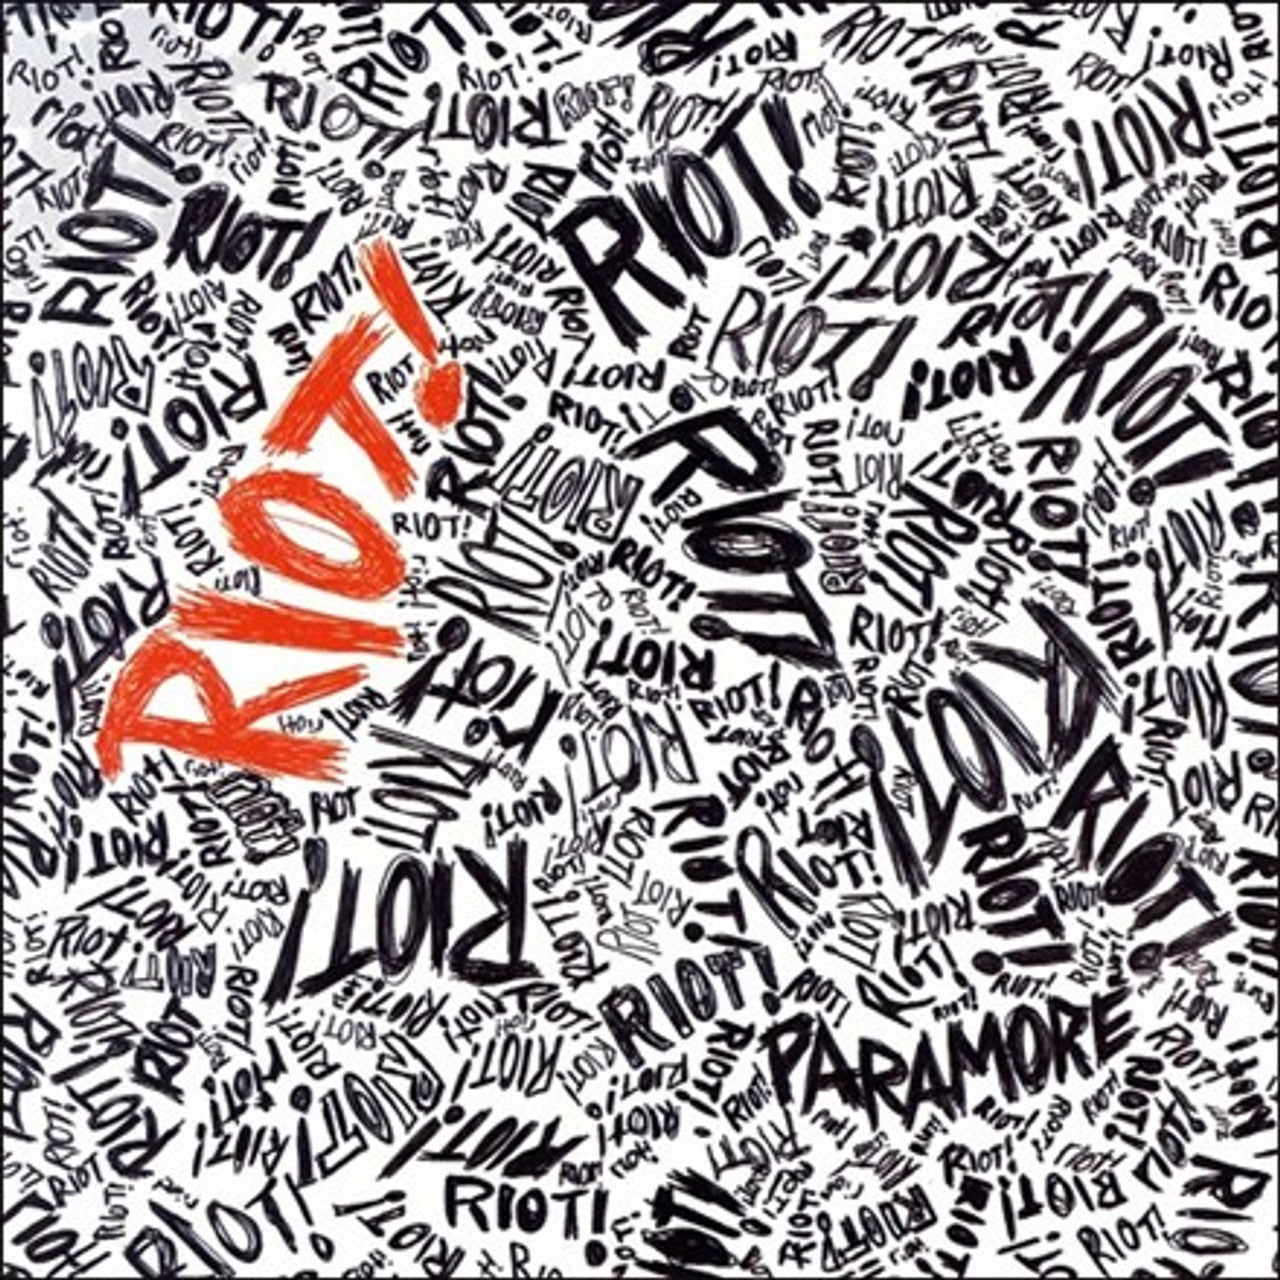 Paramore "Riot!" 25th Anniversary Edition 12" Vinyl